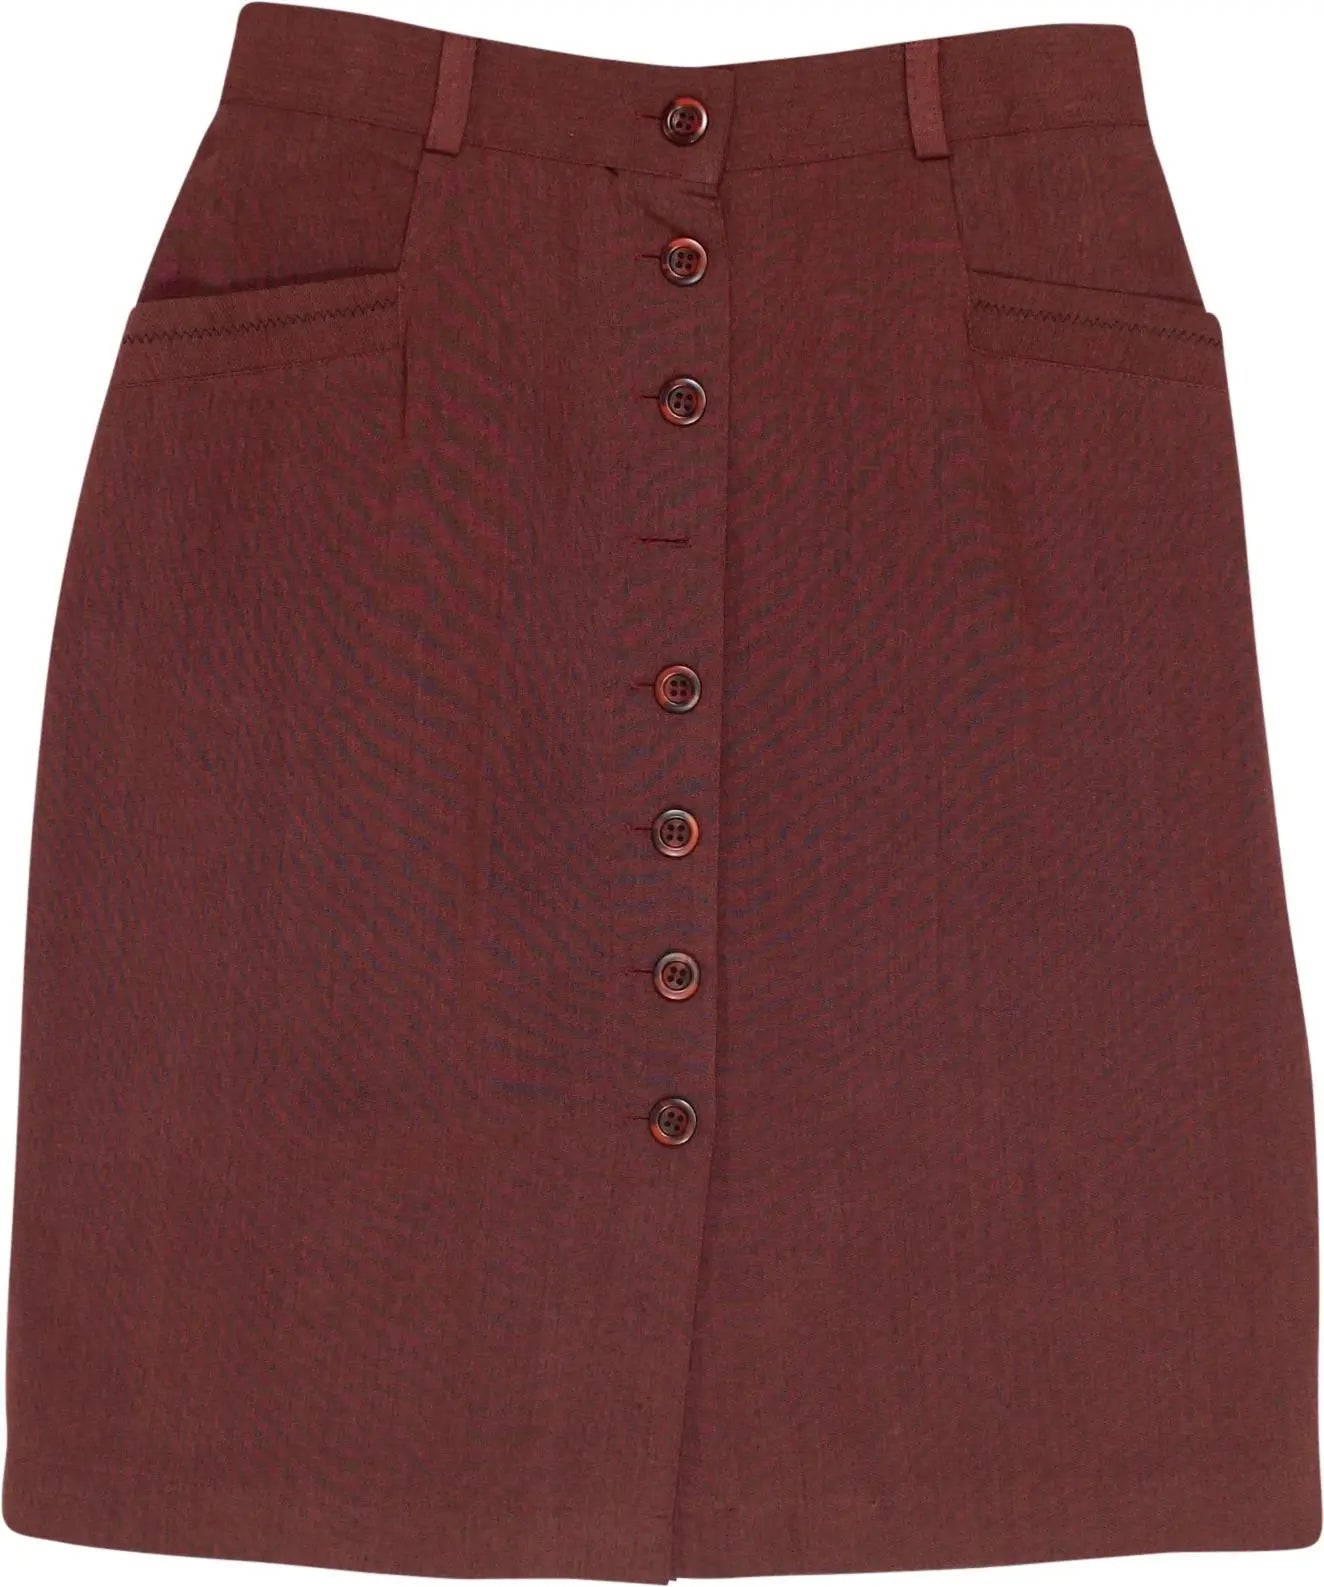 Miss Etam - Short Skirt- ThriftTale.com - Vintage and second handclothing